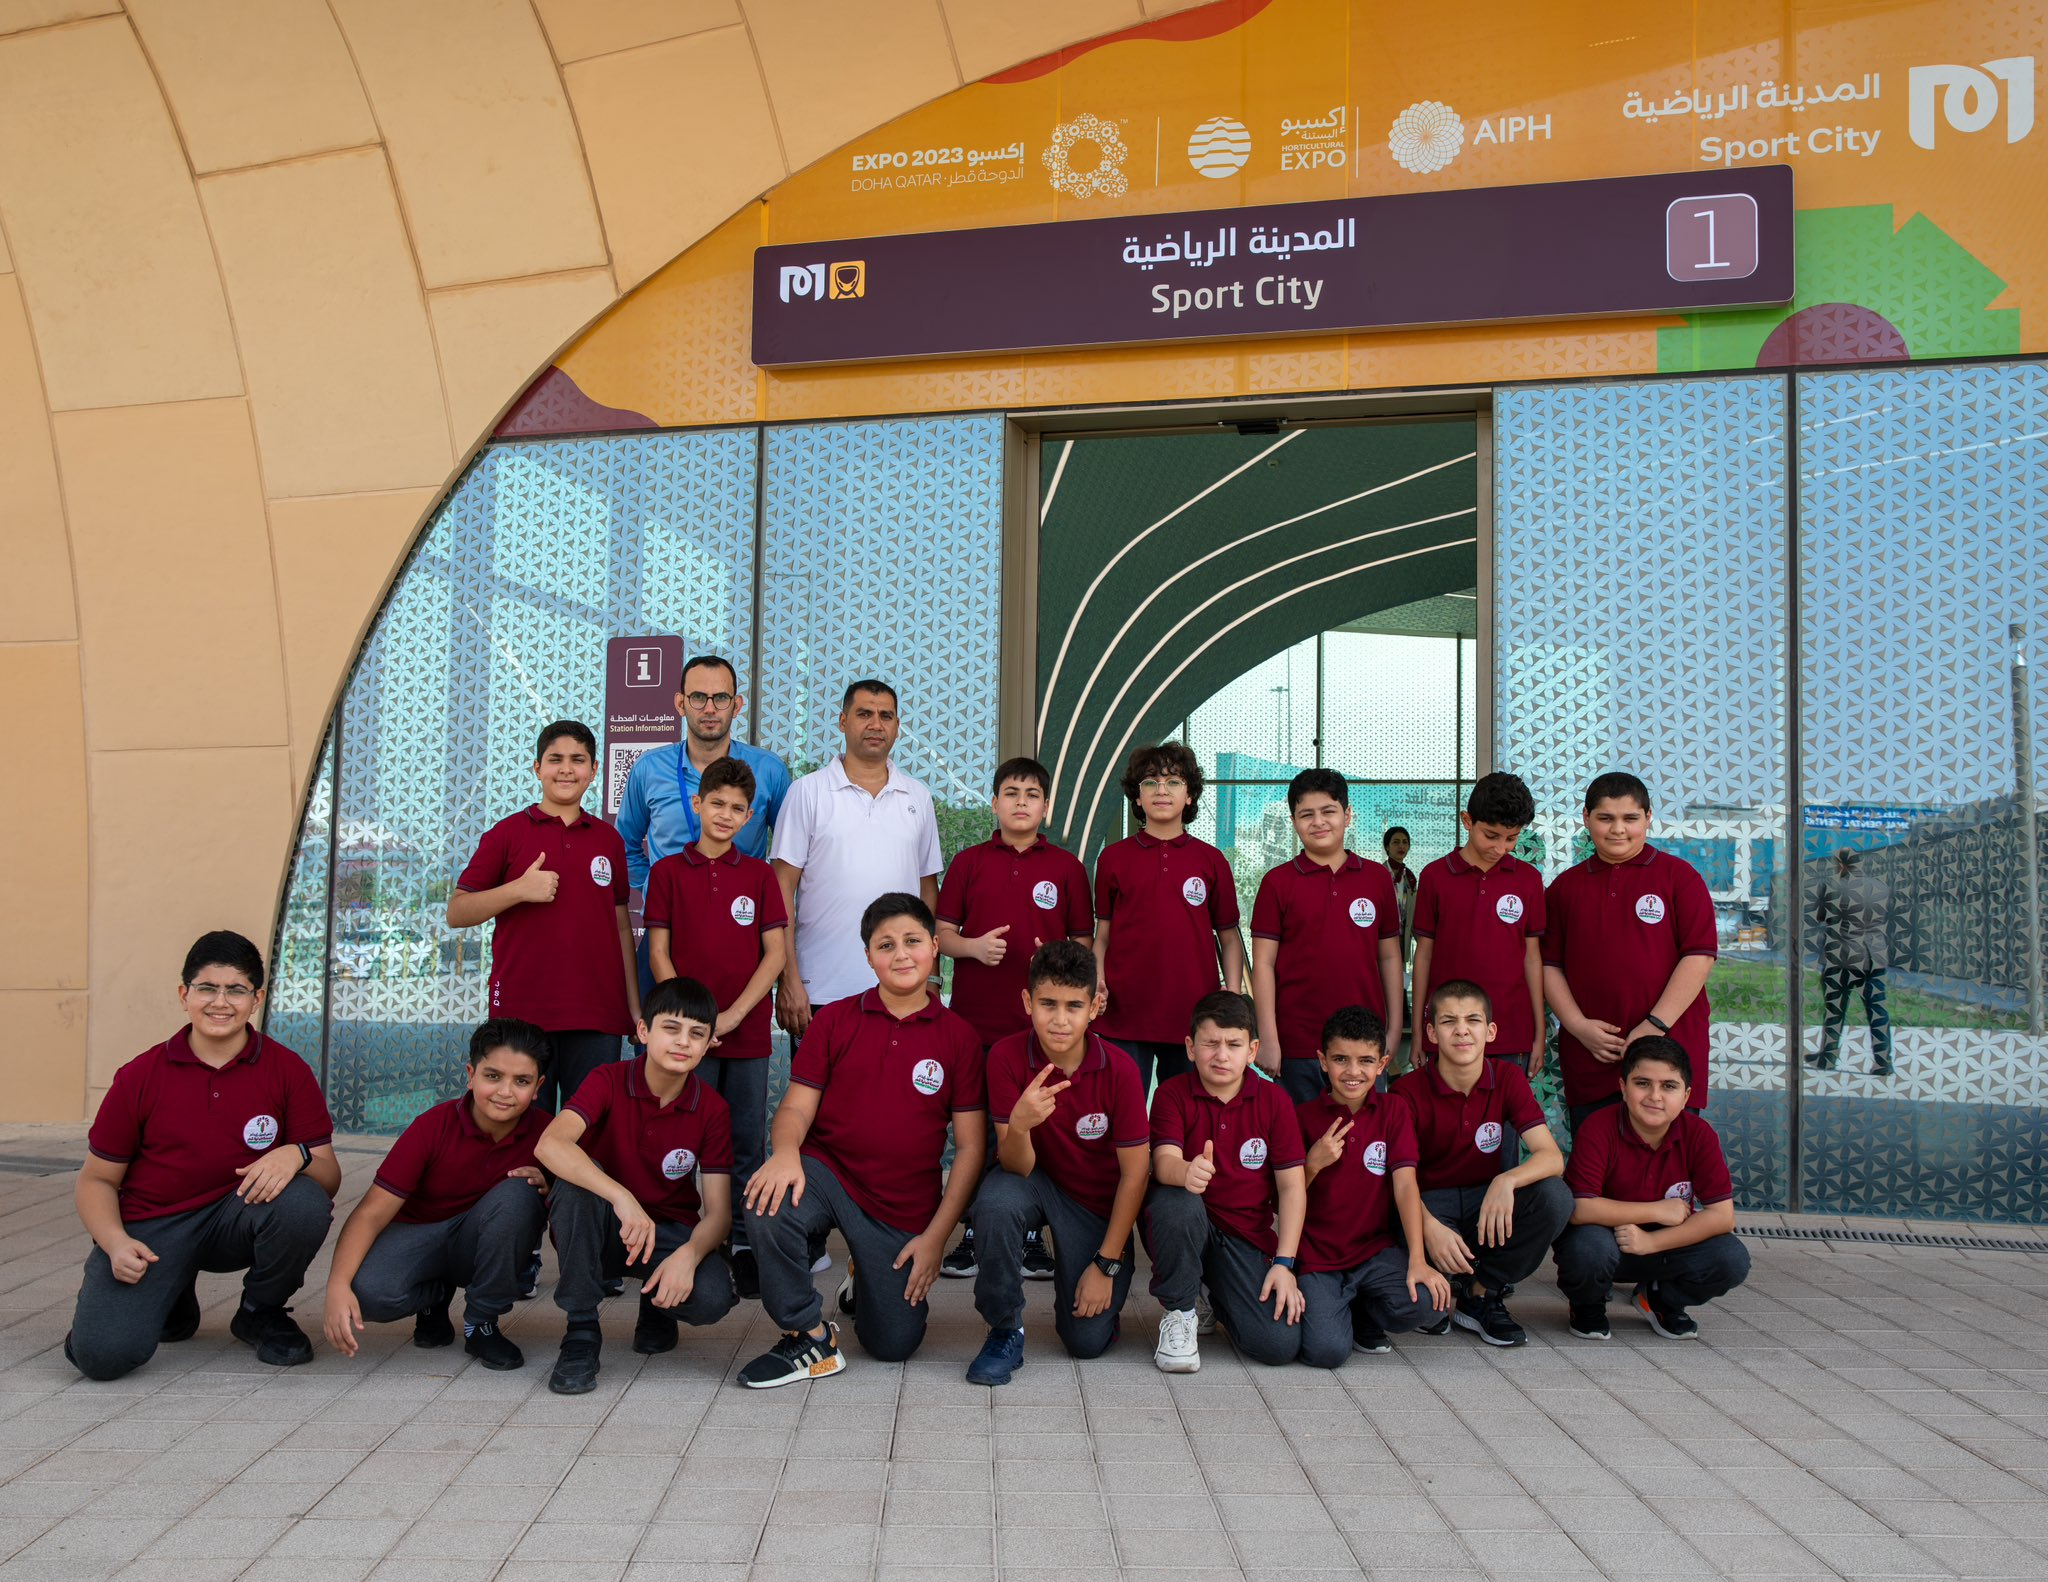 Qatar Rail Marks Back to School with Resuming "School Visits" Program